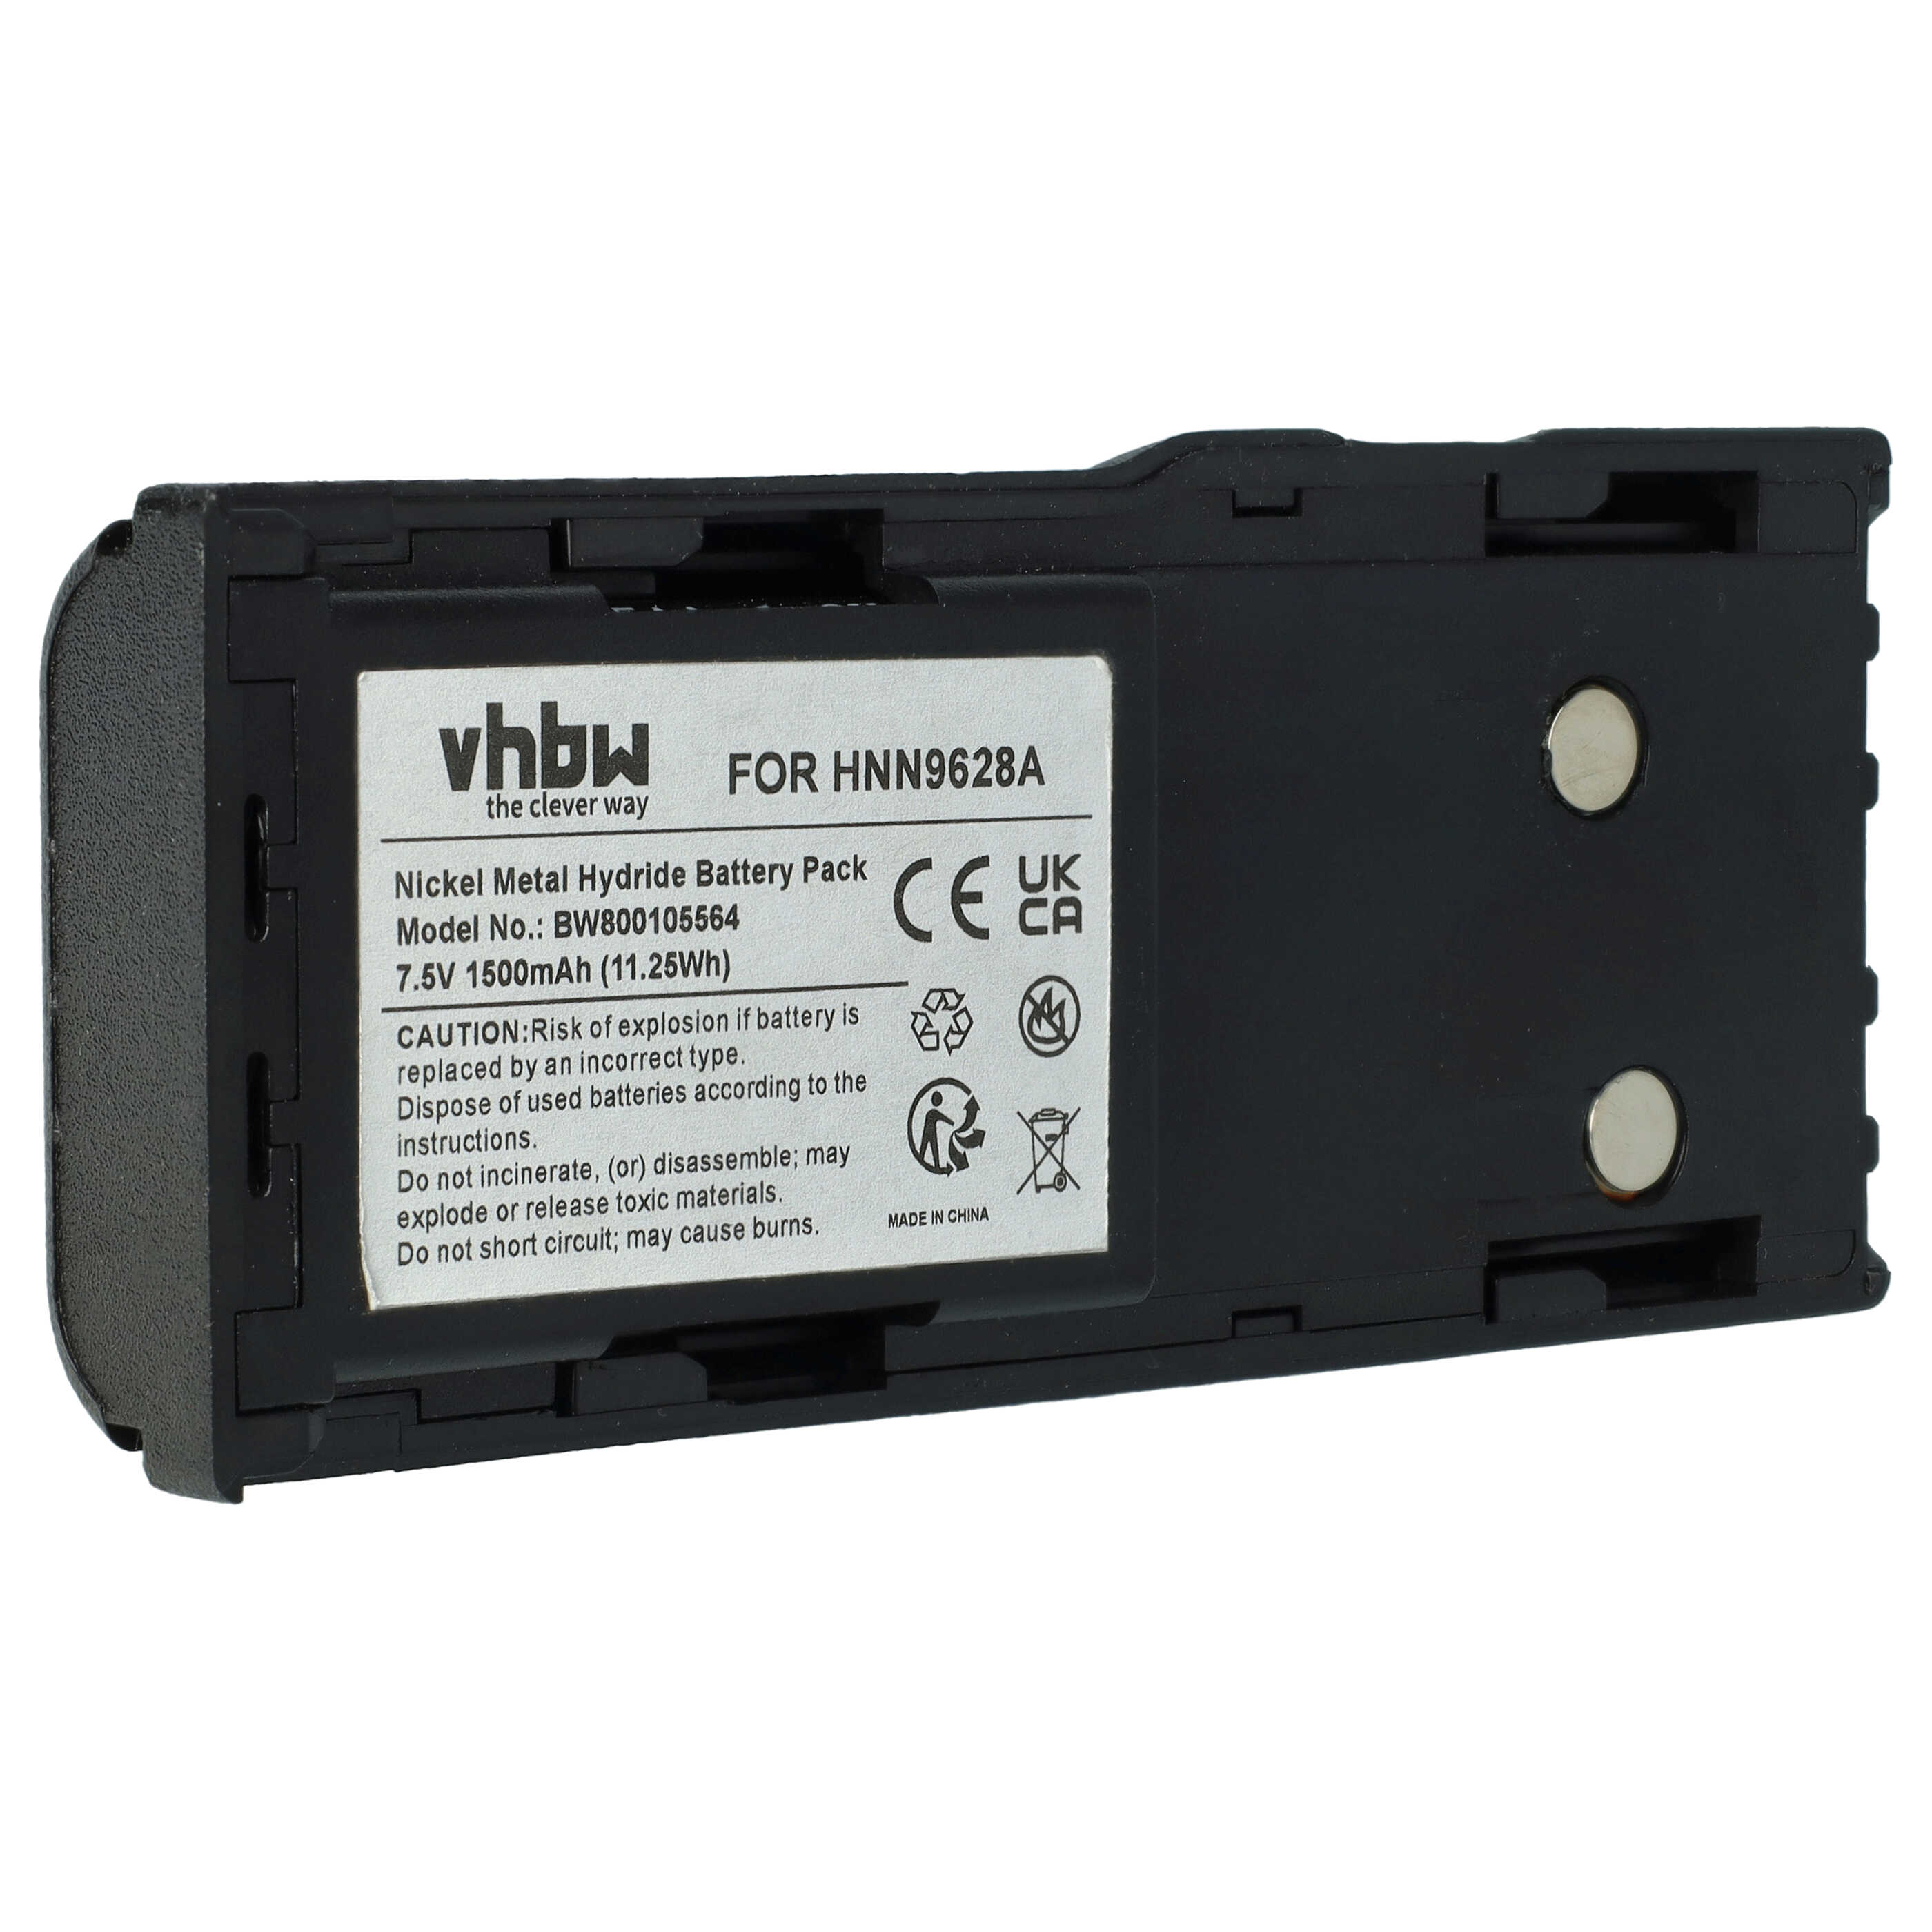 Batteria per dispositivo radio sostituisce Motorola HNN8133C, HNN8308A, HNN9628 Motorola - 1500mAh 7,5V NiMH